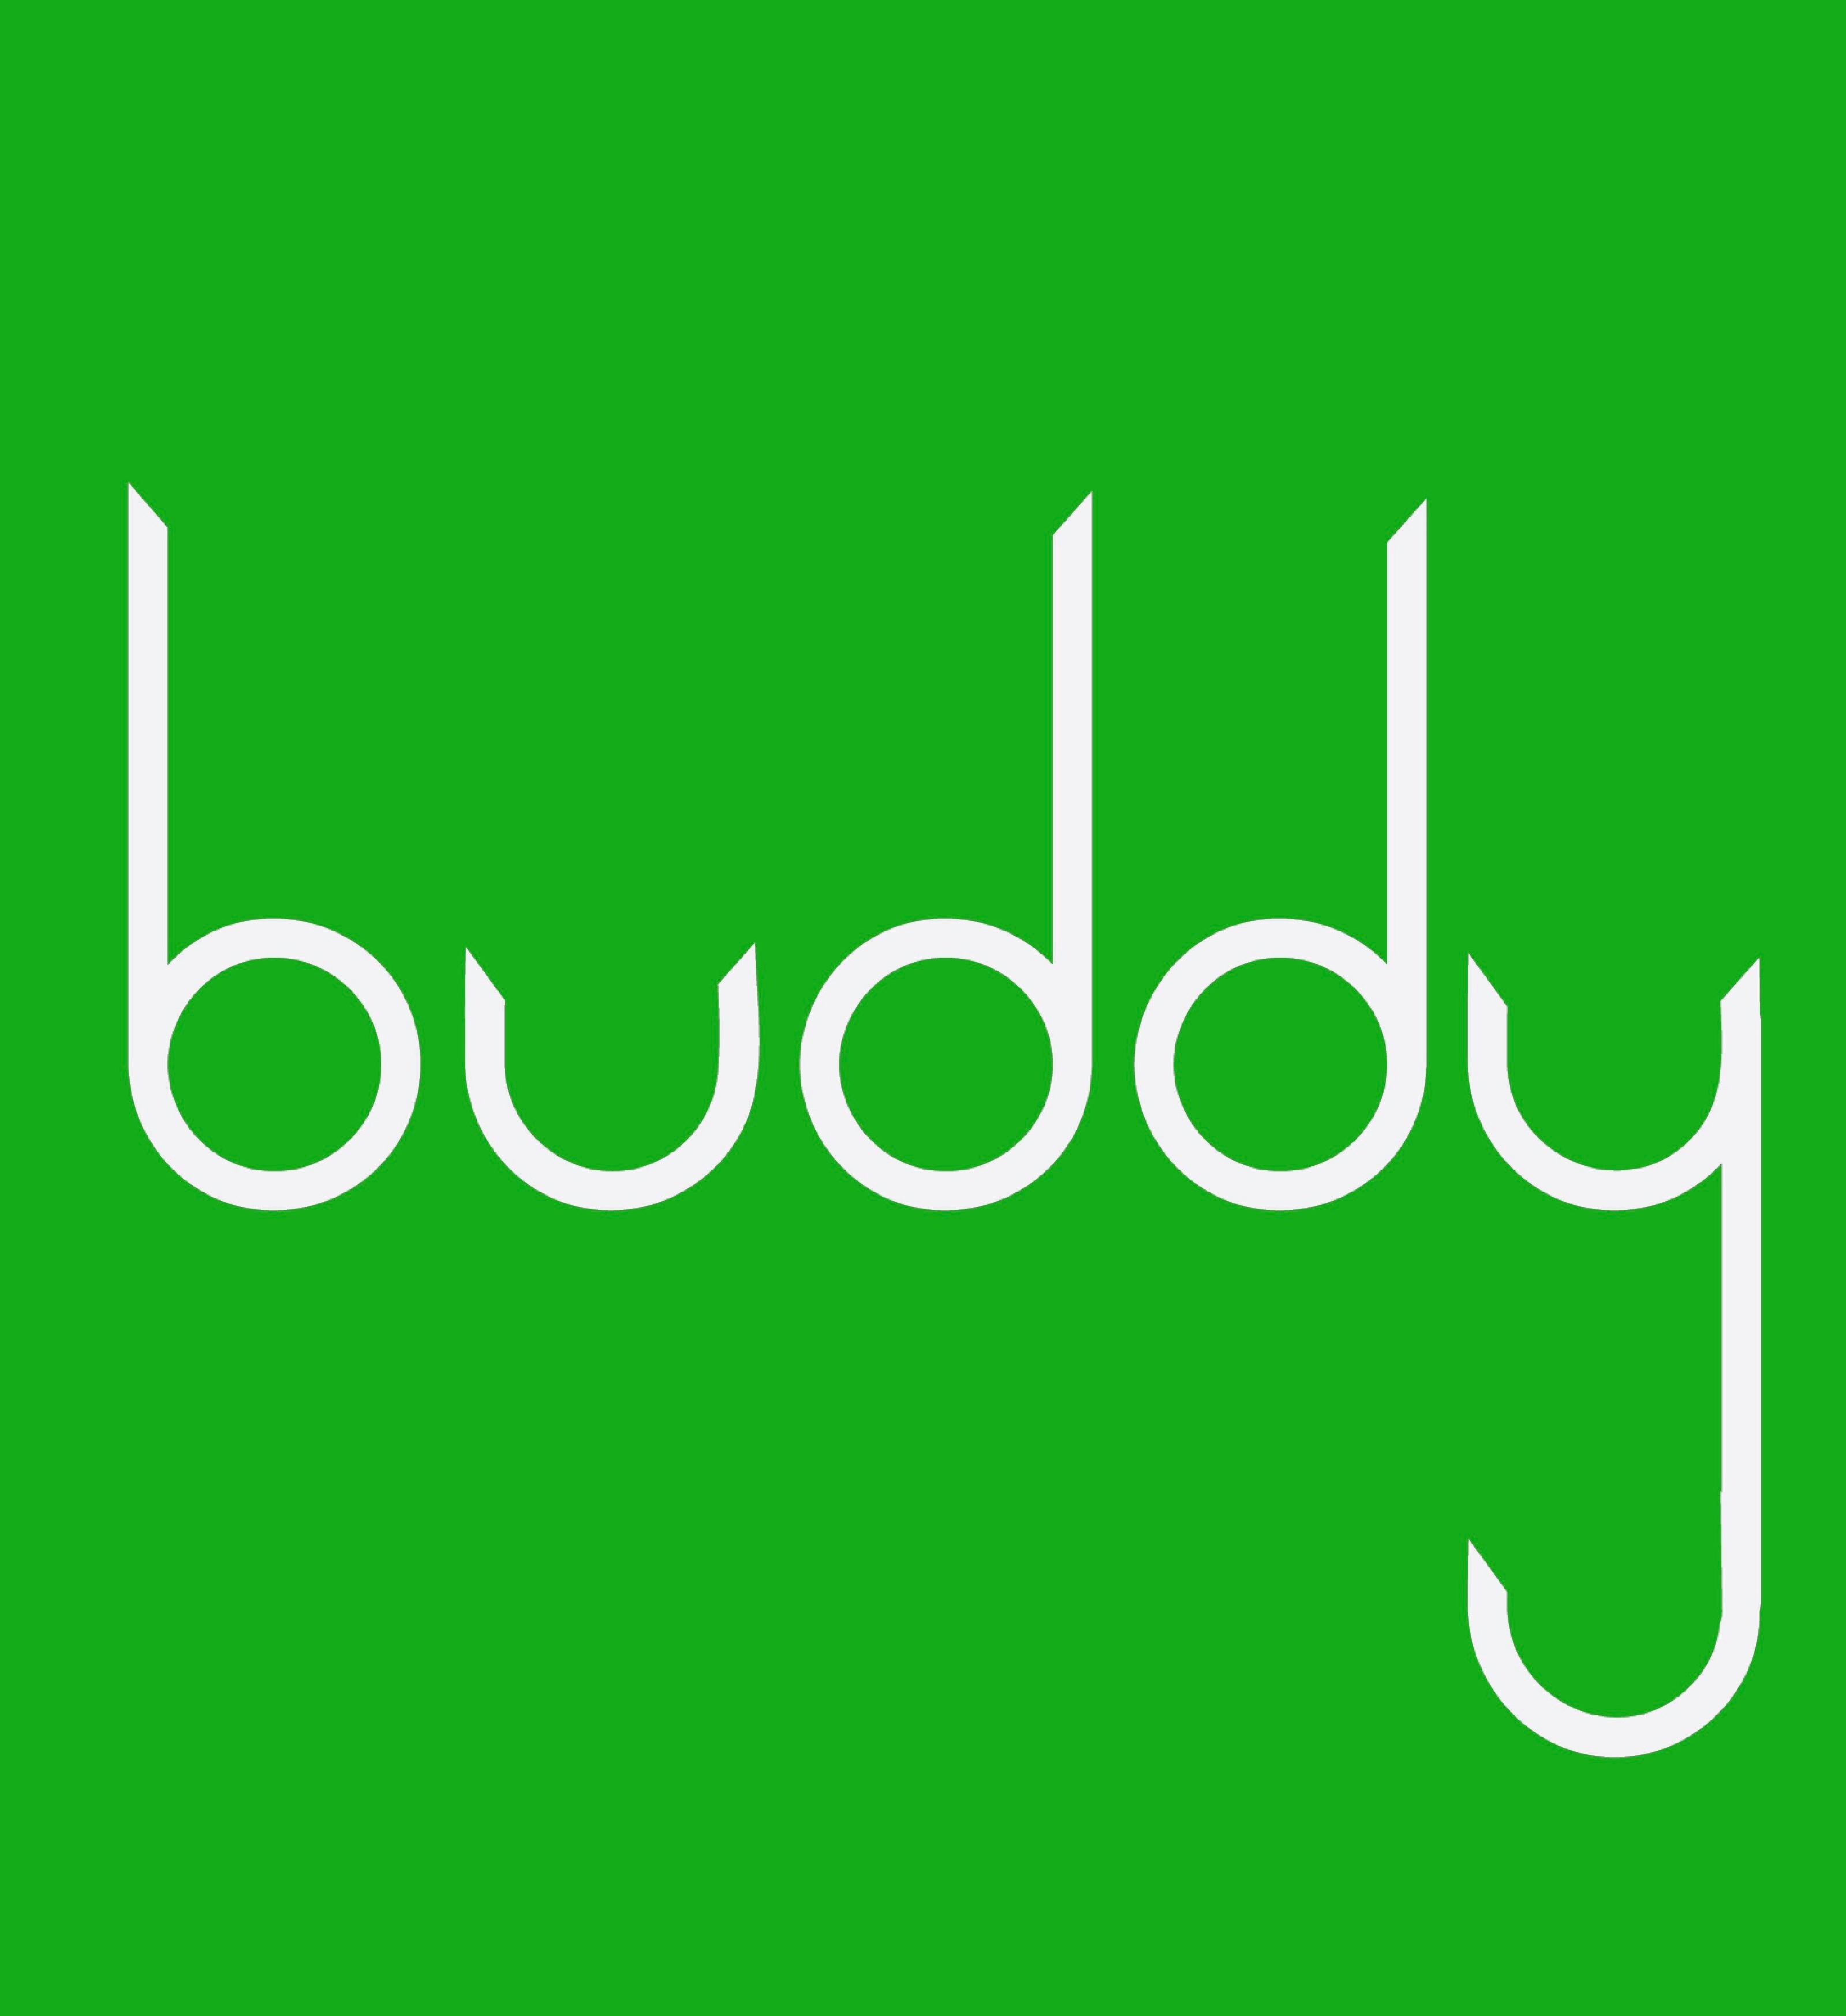 Trademark Logo BUDDY